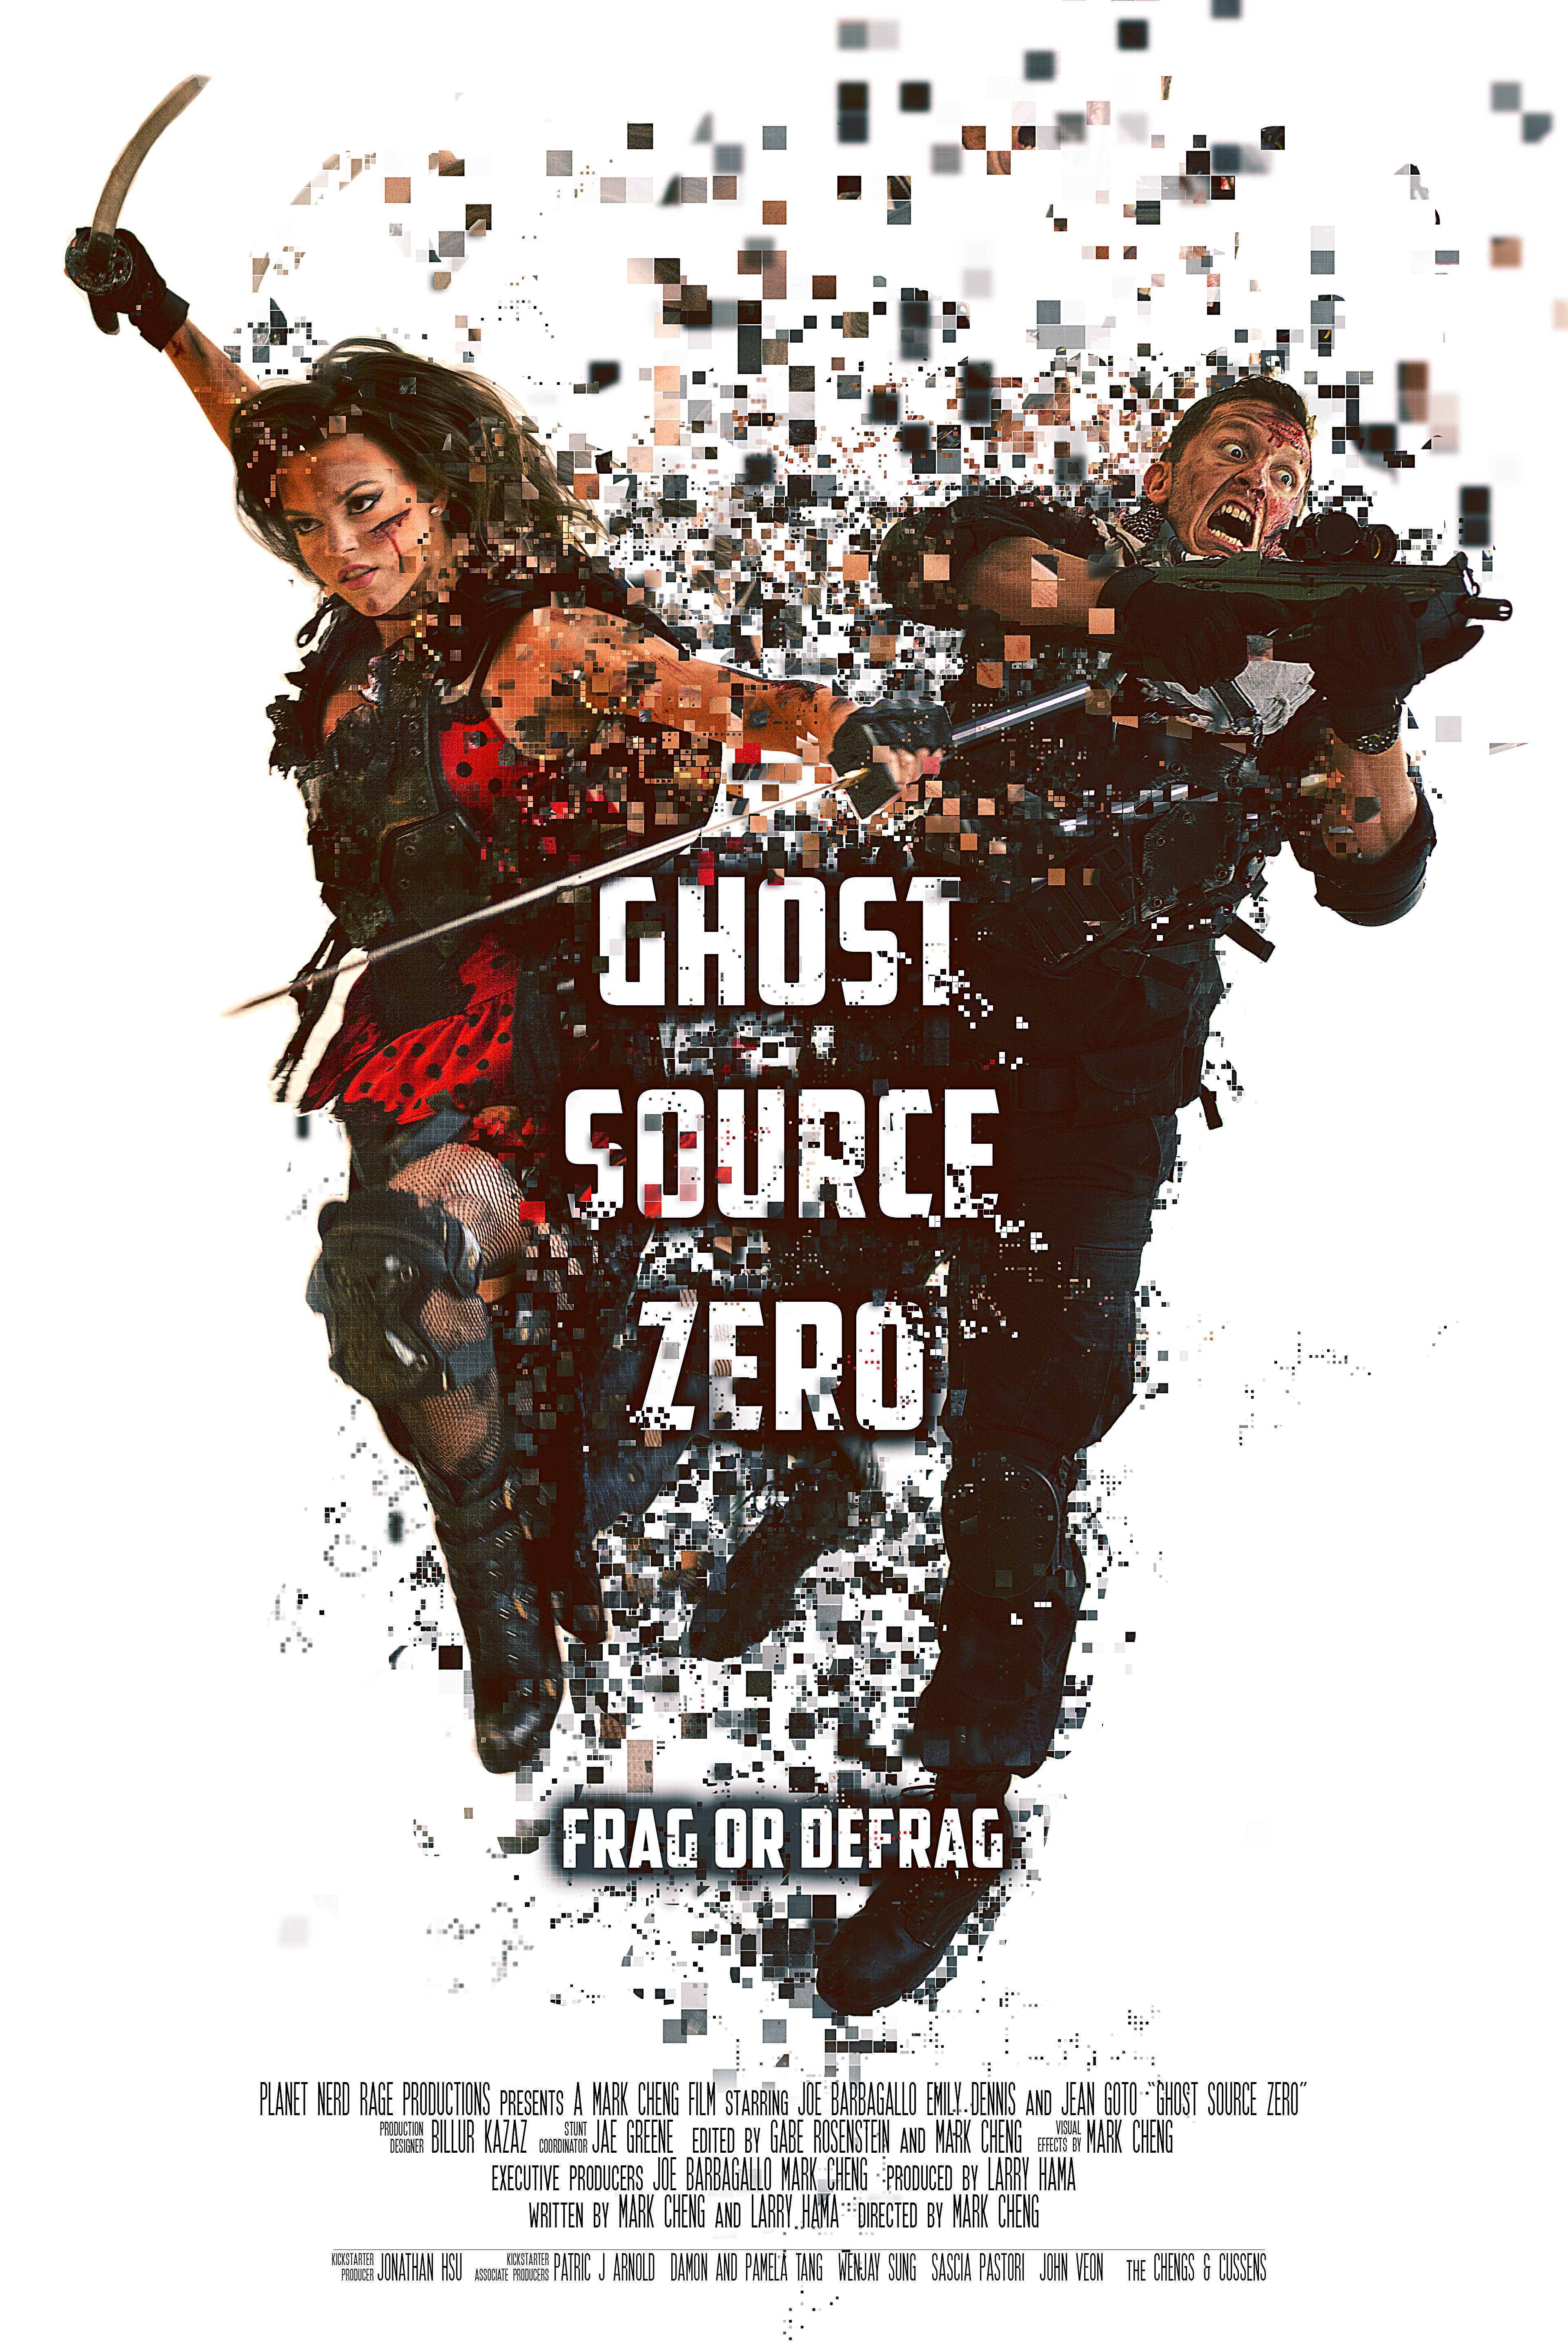 Nonton film Ghost Source Zero layarkaca21 indoxx1 ganool online streaming terbaru